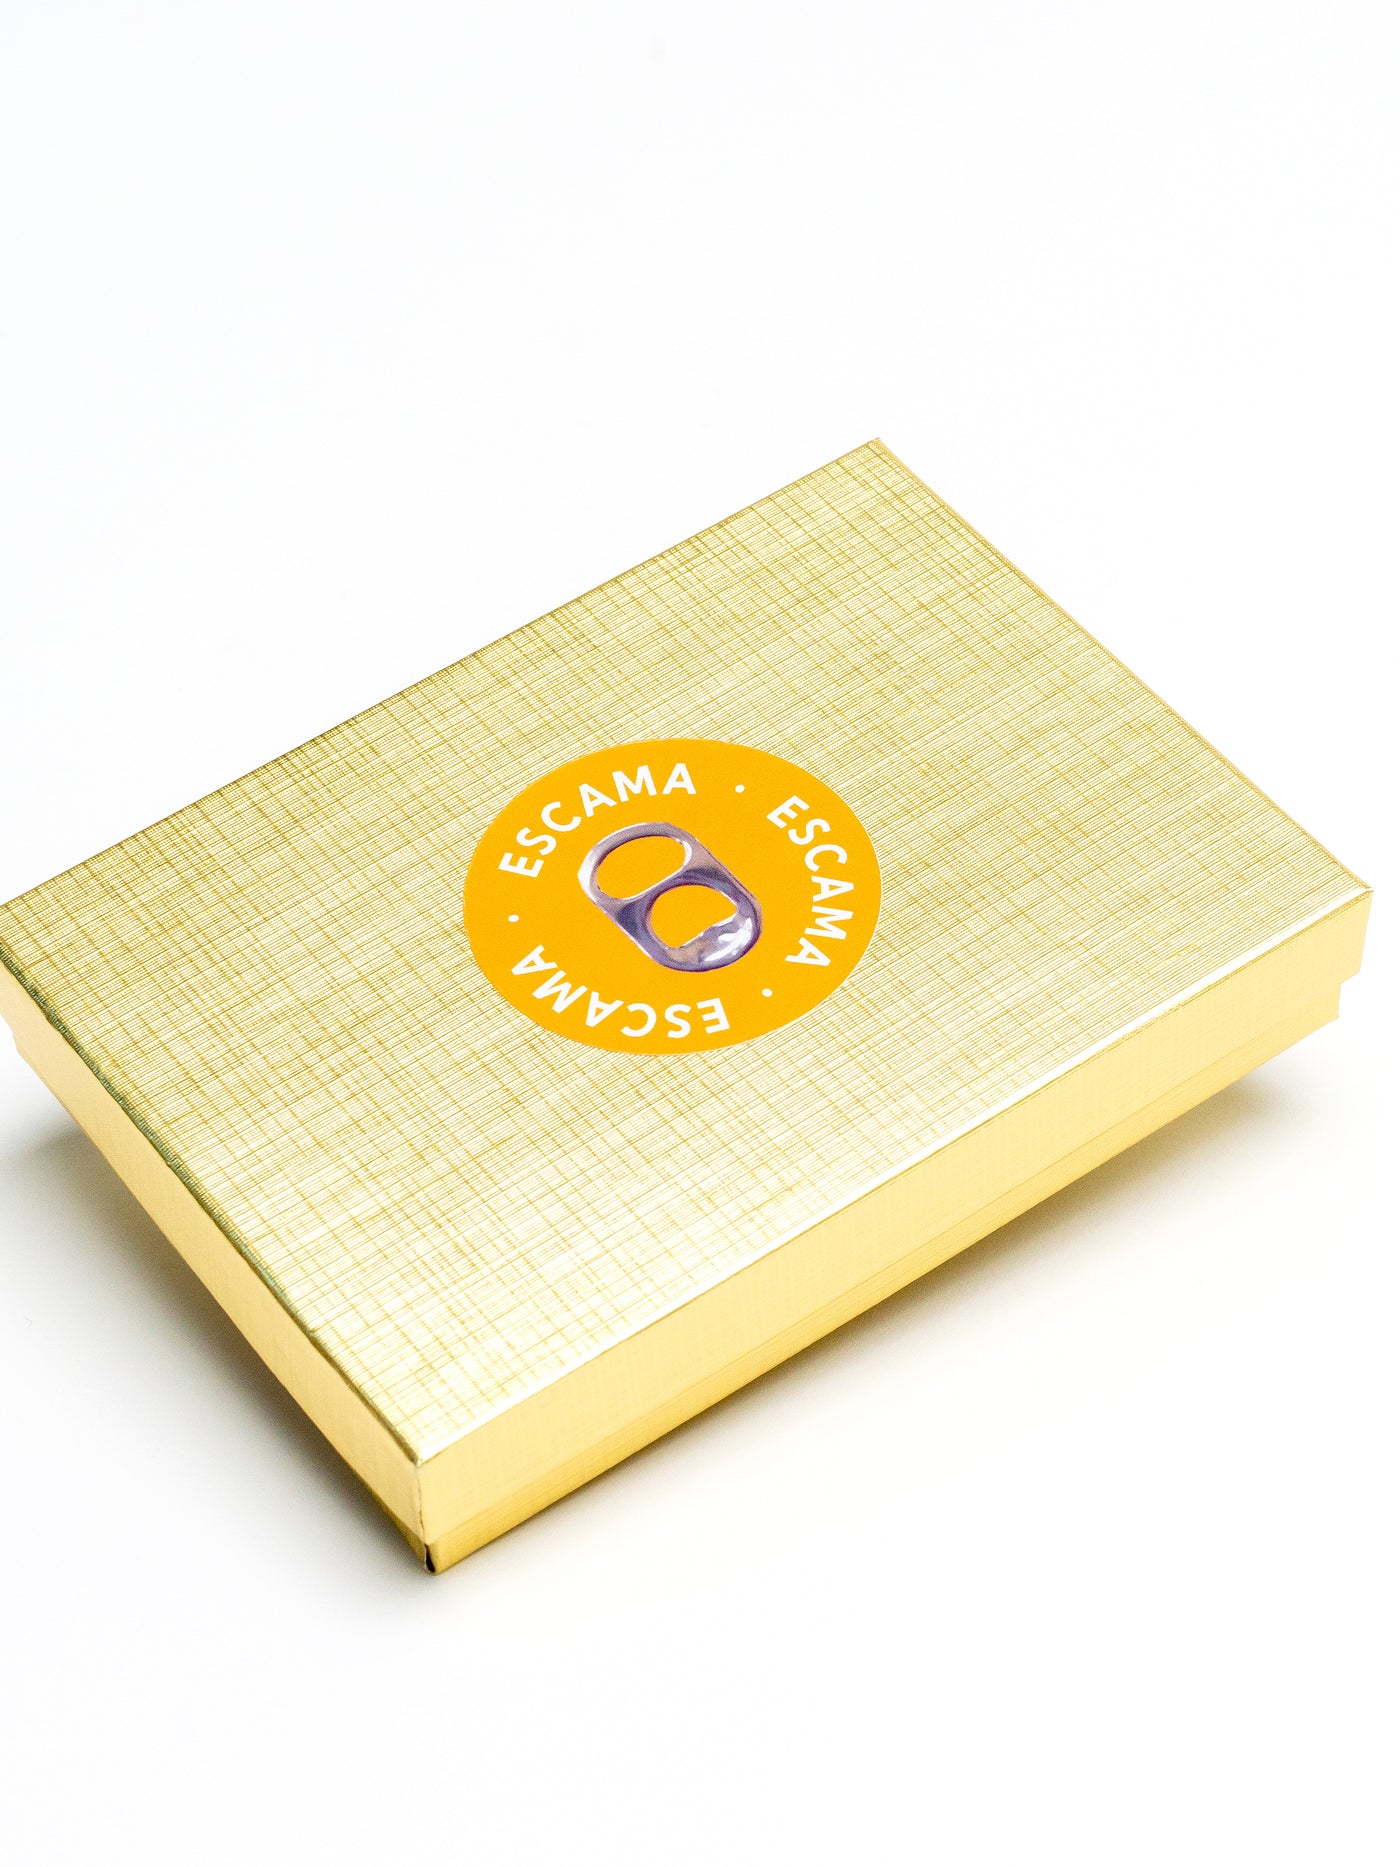 alt="gift box for can tab jewelry - escama studio"